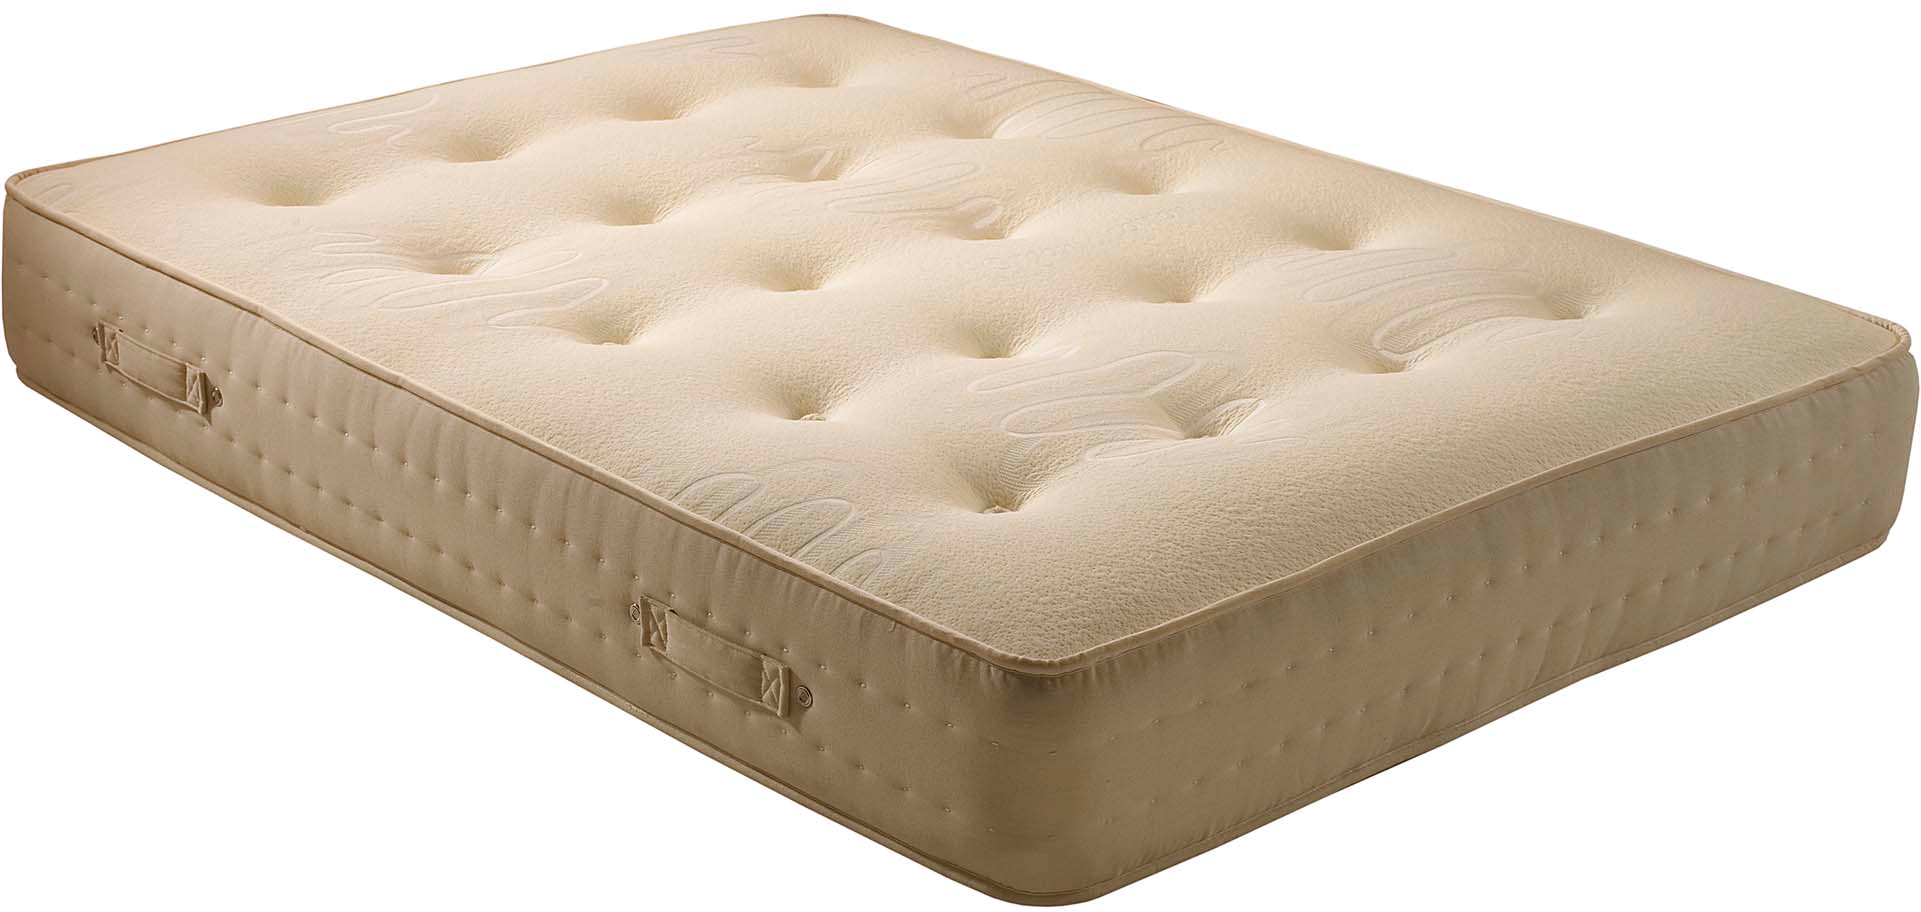 foam mattress and old